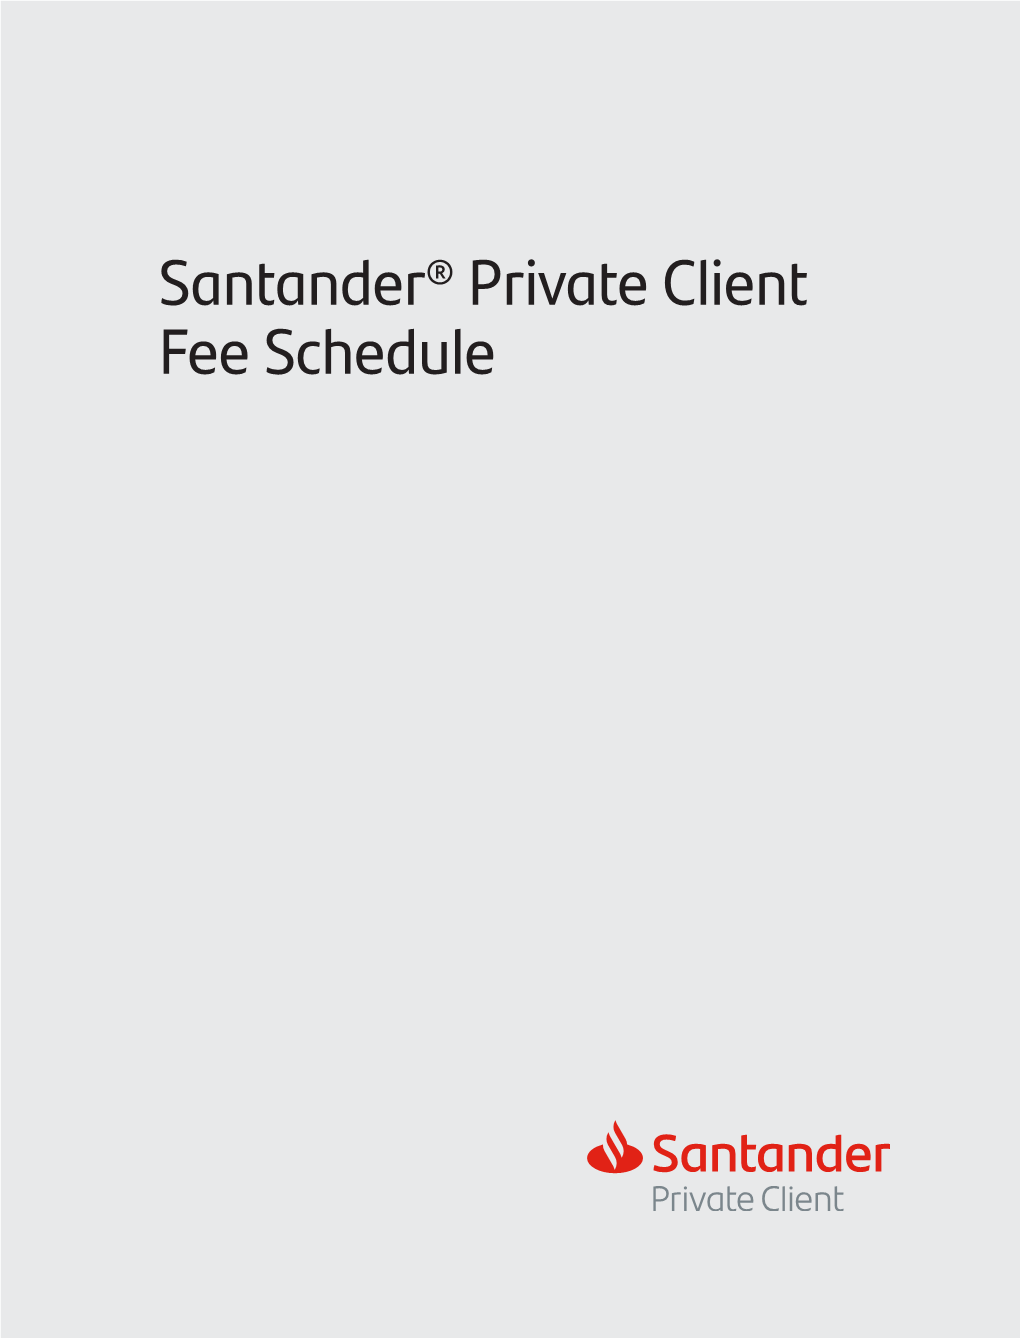 Santander® Private Client Fee Schedule